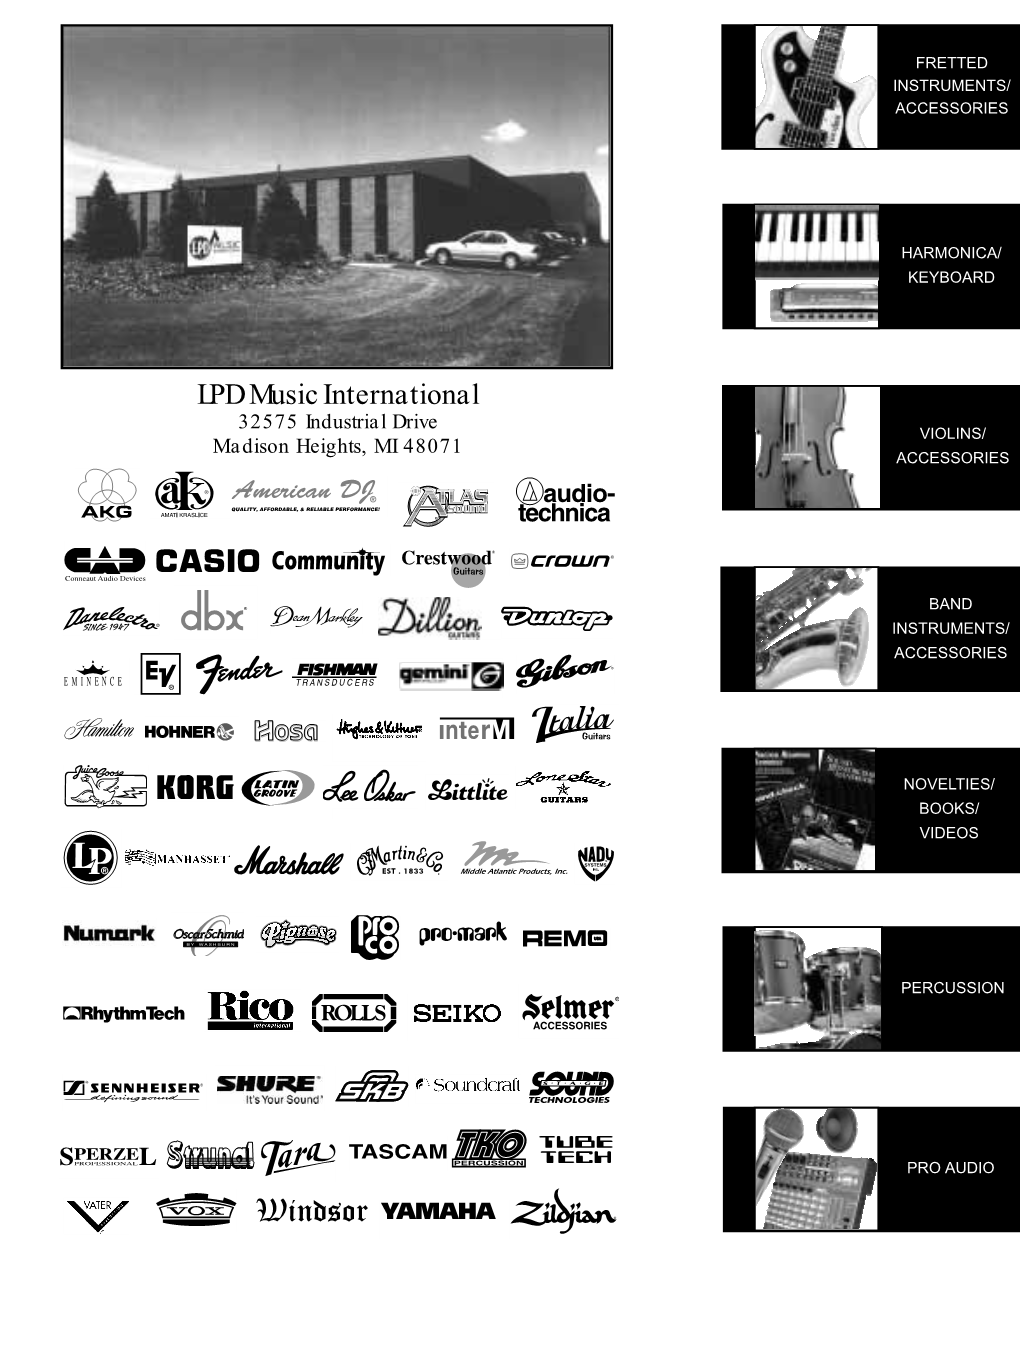 LPD Music International 32575 Industrial Drive VIOLINS/ Madison Heights, MI 48071 ACCESSORIES